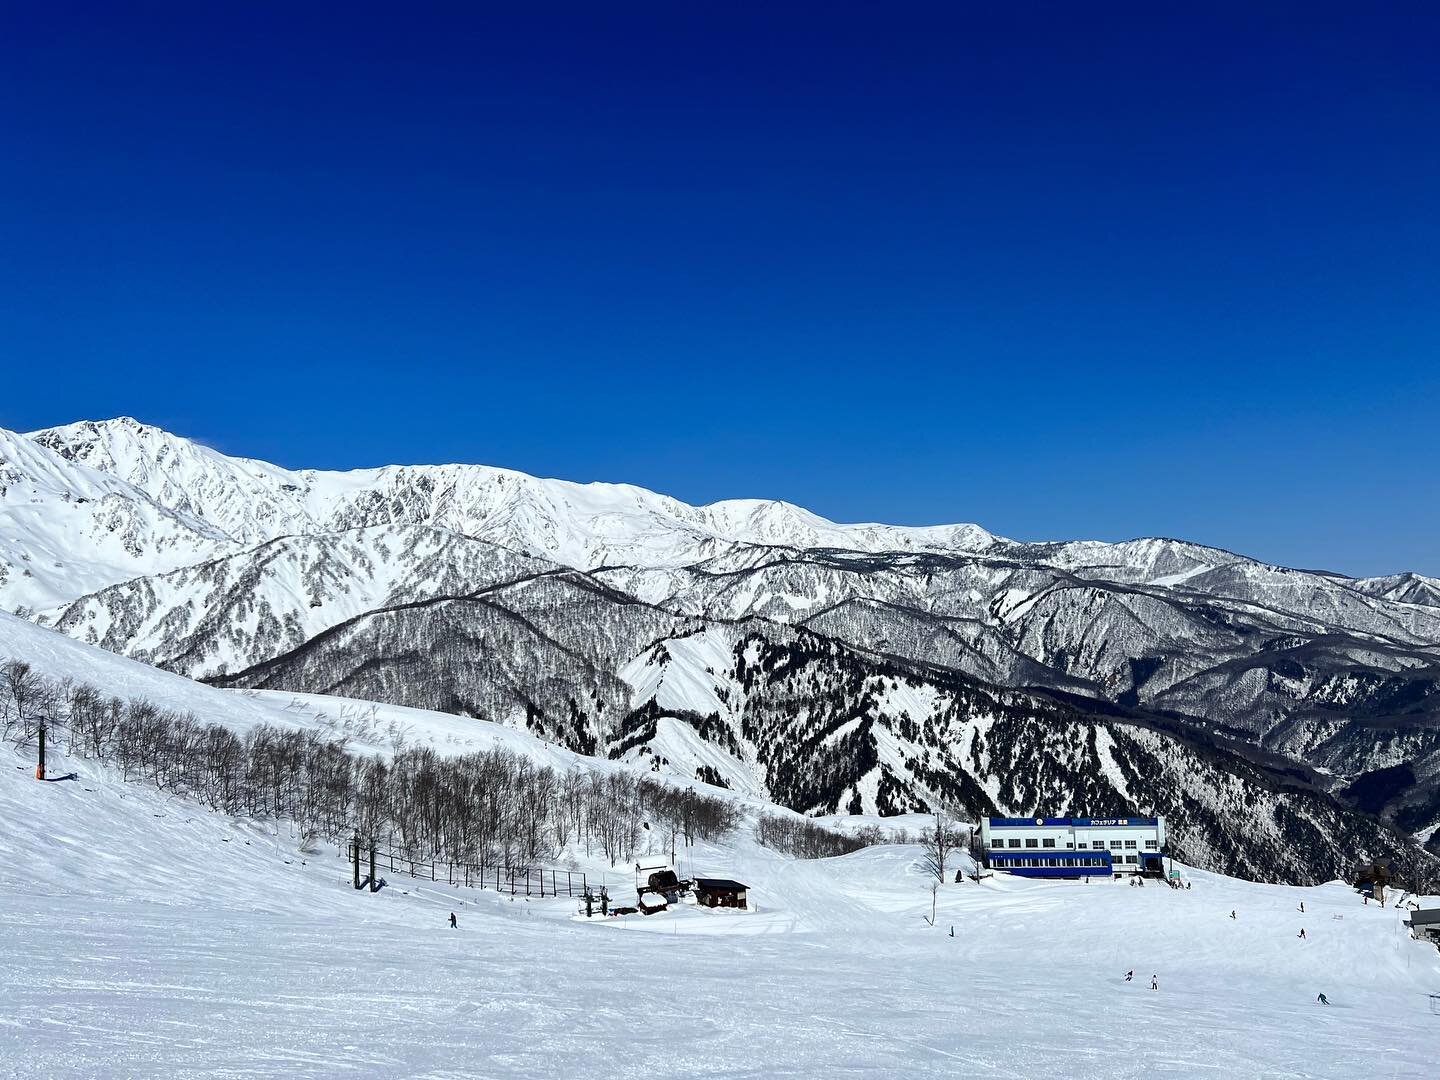 Who went skiing on such a lucky day? 🙋&zwj;♀️🙋&zwj;♂️🙋
Happy Happo! ⛷
.
#happoone 
#白馬村 #信州 #旅行 #冬旅 #長野県観光 #旅行好きな人と繋がりたい #❄️ #スキーすきな人と繋がりたい #スノボすきな人と繋がりたい #skiholiday #japow #hakuba #hakubavalley #instatravel #japanholiday #winter #skijapanholiday